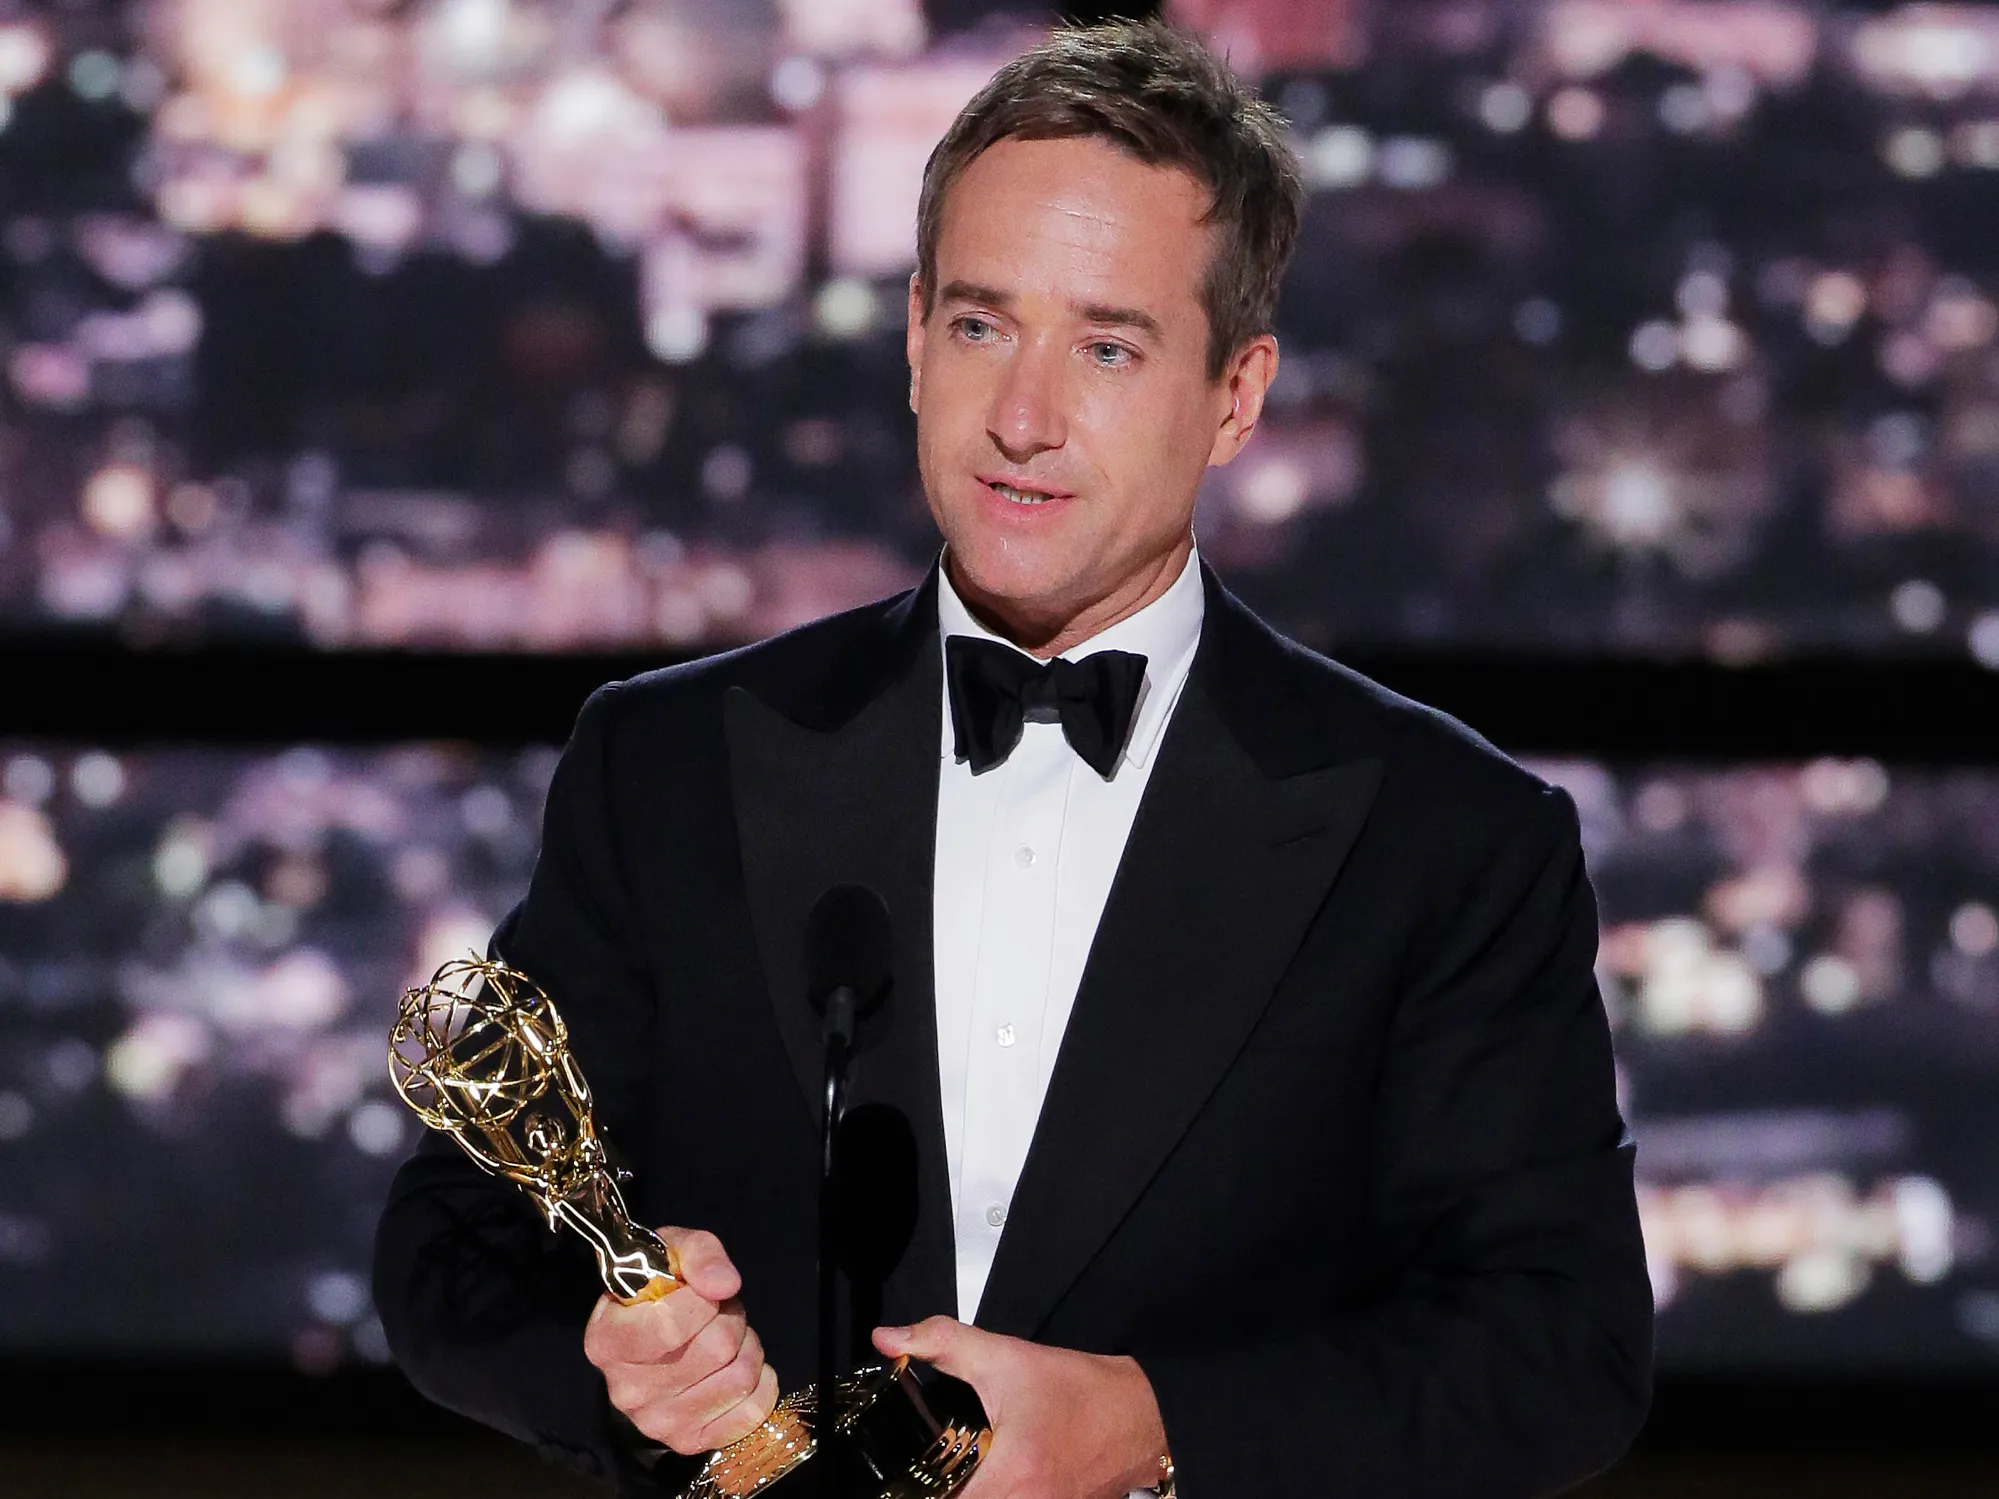 Daftar Lengkap Pemenang Emmy Awards 2022